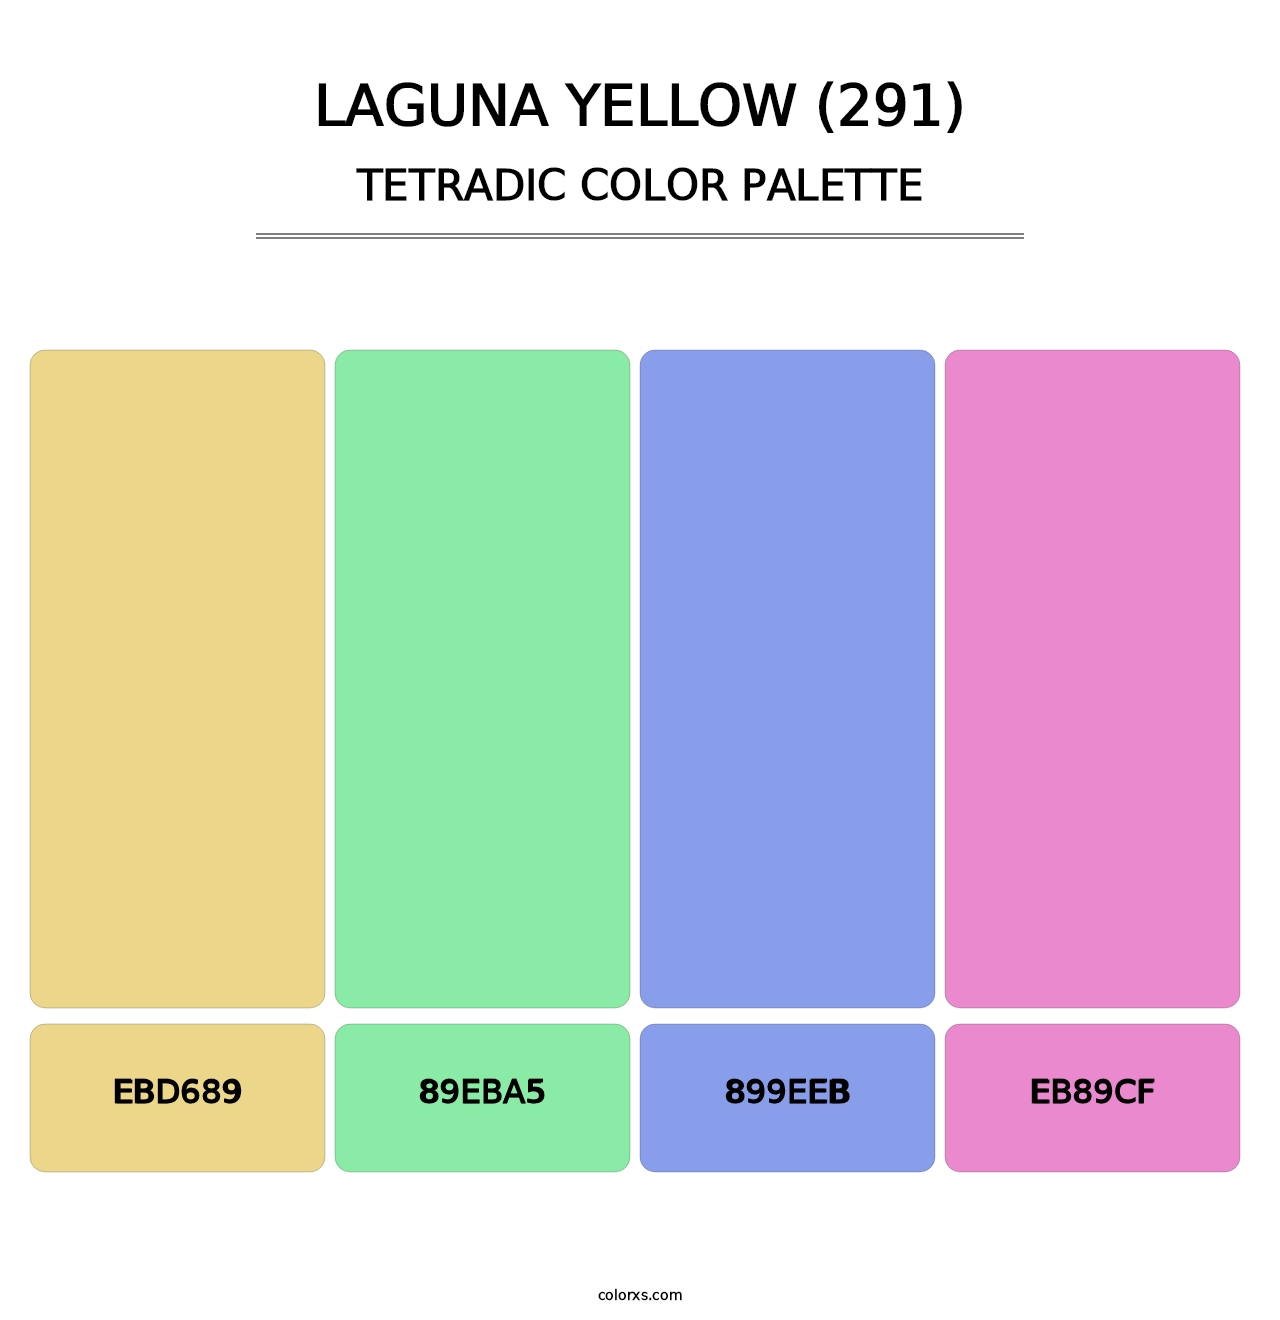 Laguna Yellow (291) - Tetradic Color Palette